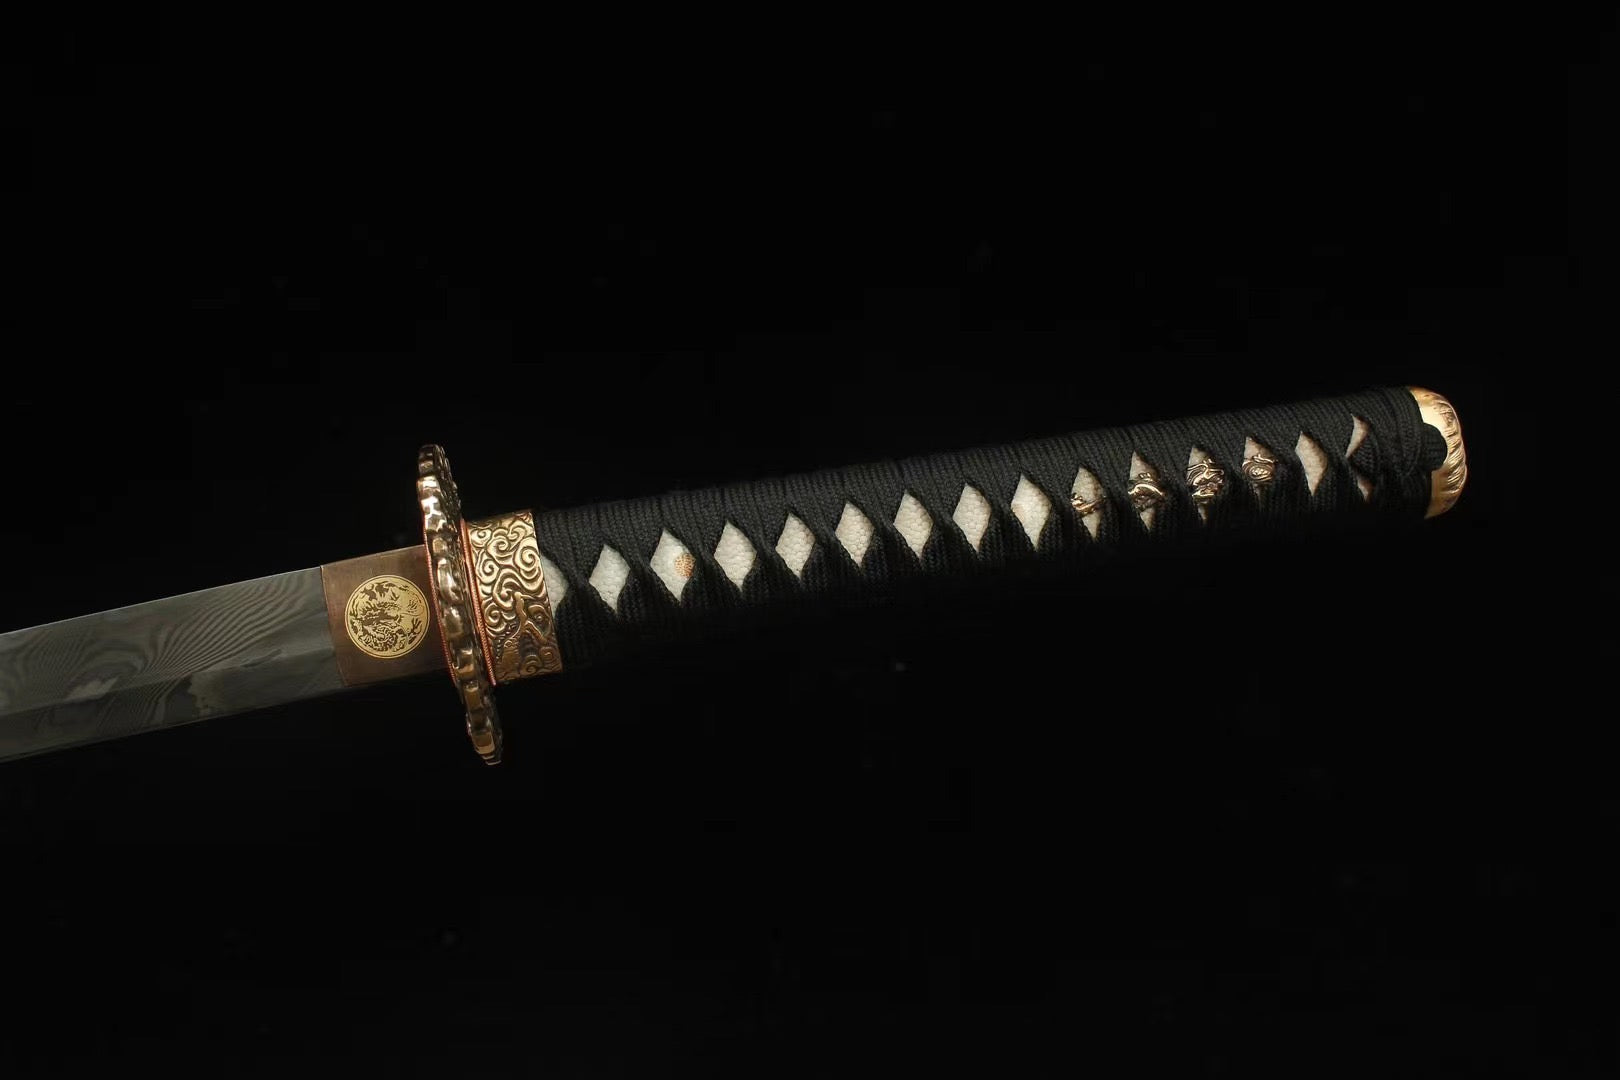 Damascus Steel Sword Demon Dragon Katana Sword,Real Handmade Japanese Samurai Sword Full Tang